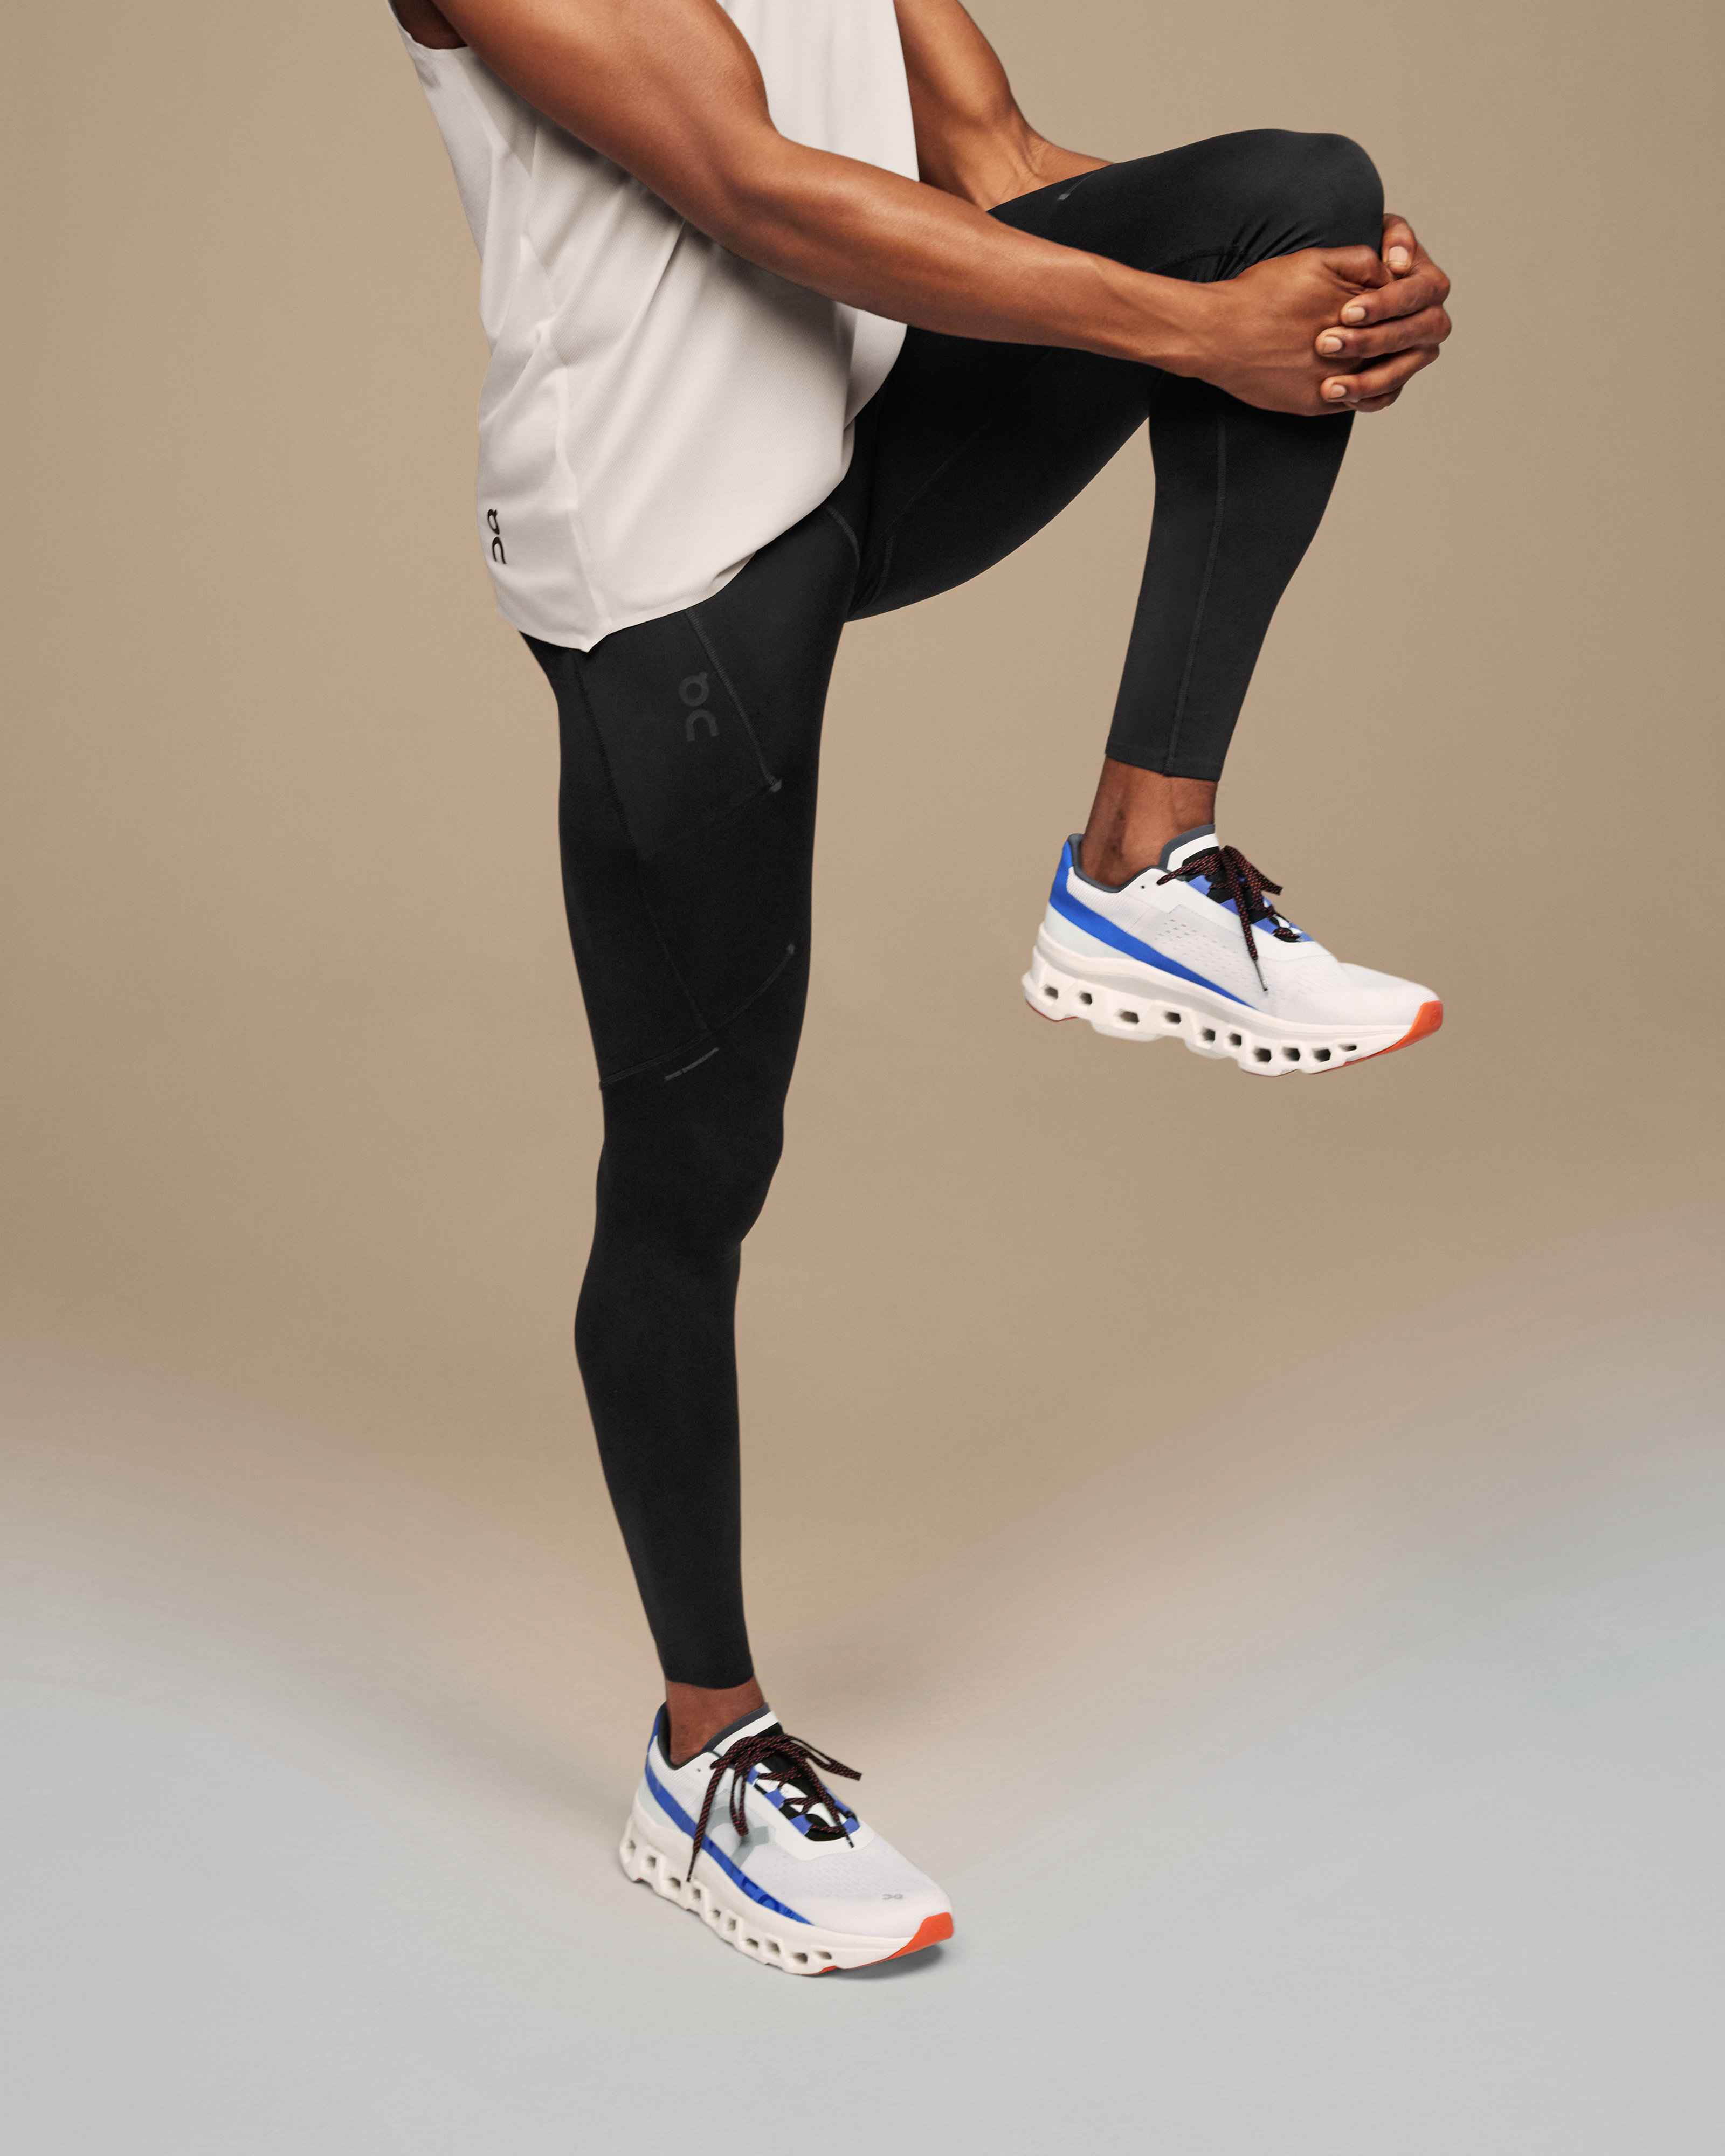 TOPTIE 2 in 1 Men's Active Running Shorts, Basketball Tights Pants-Bla –  EveryMarket